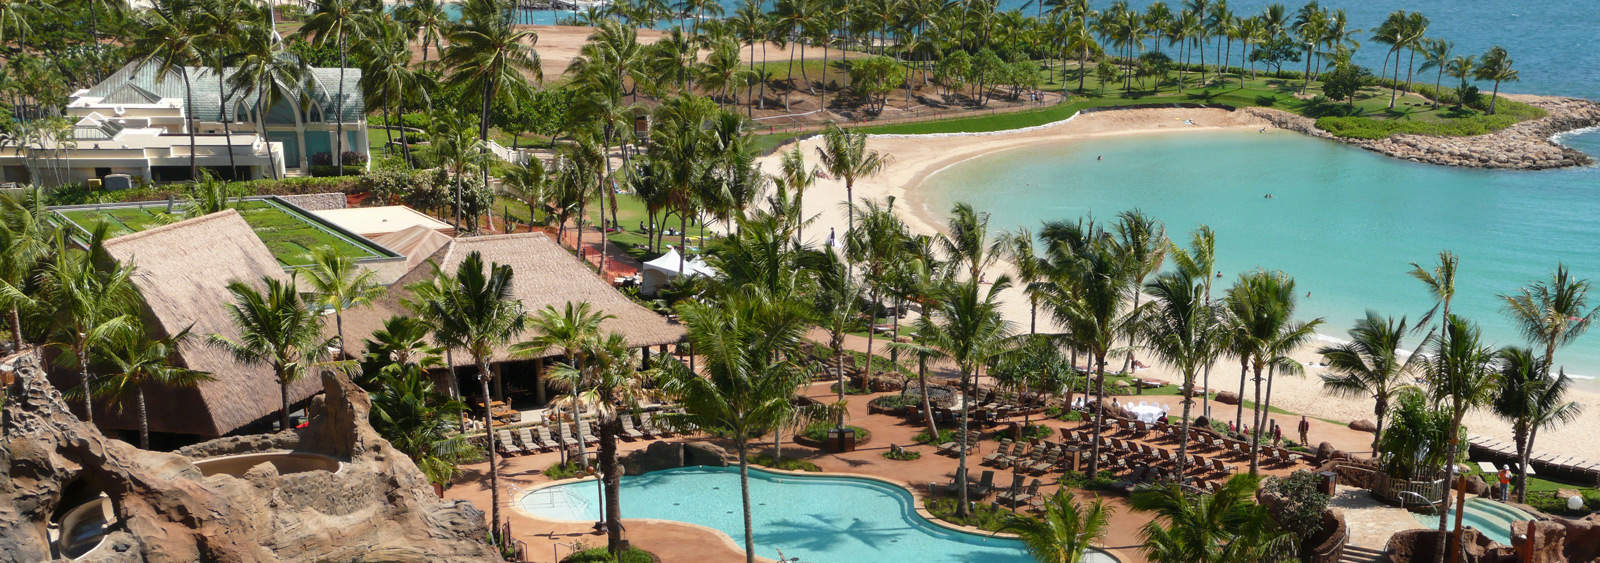 Aulani Disney Resort Hawaii 4